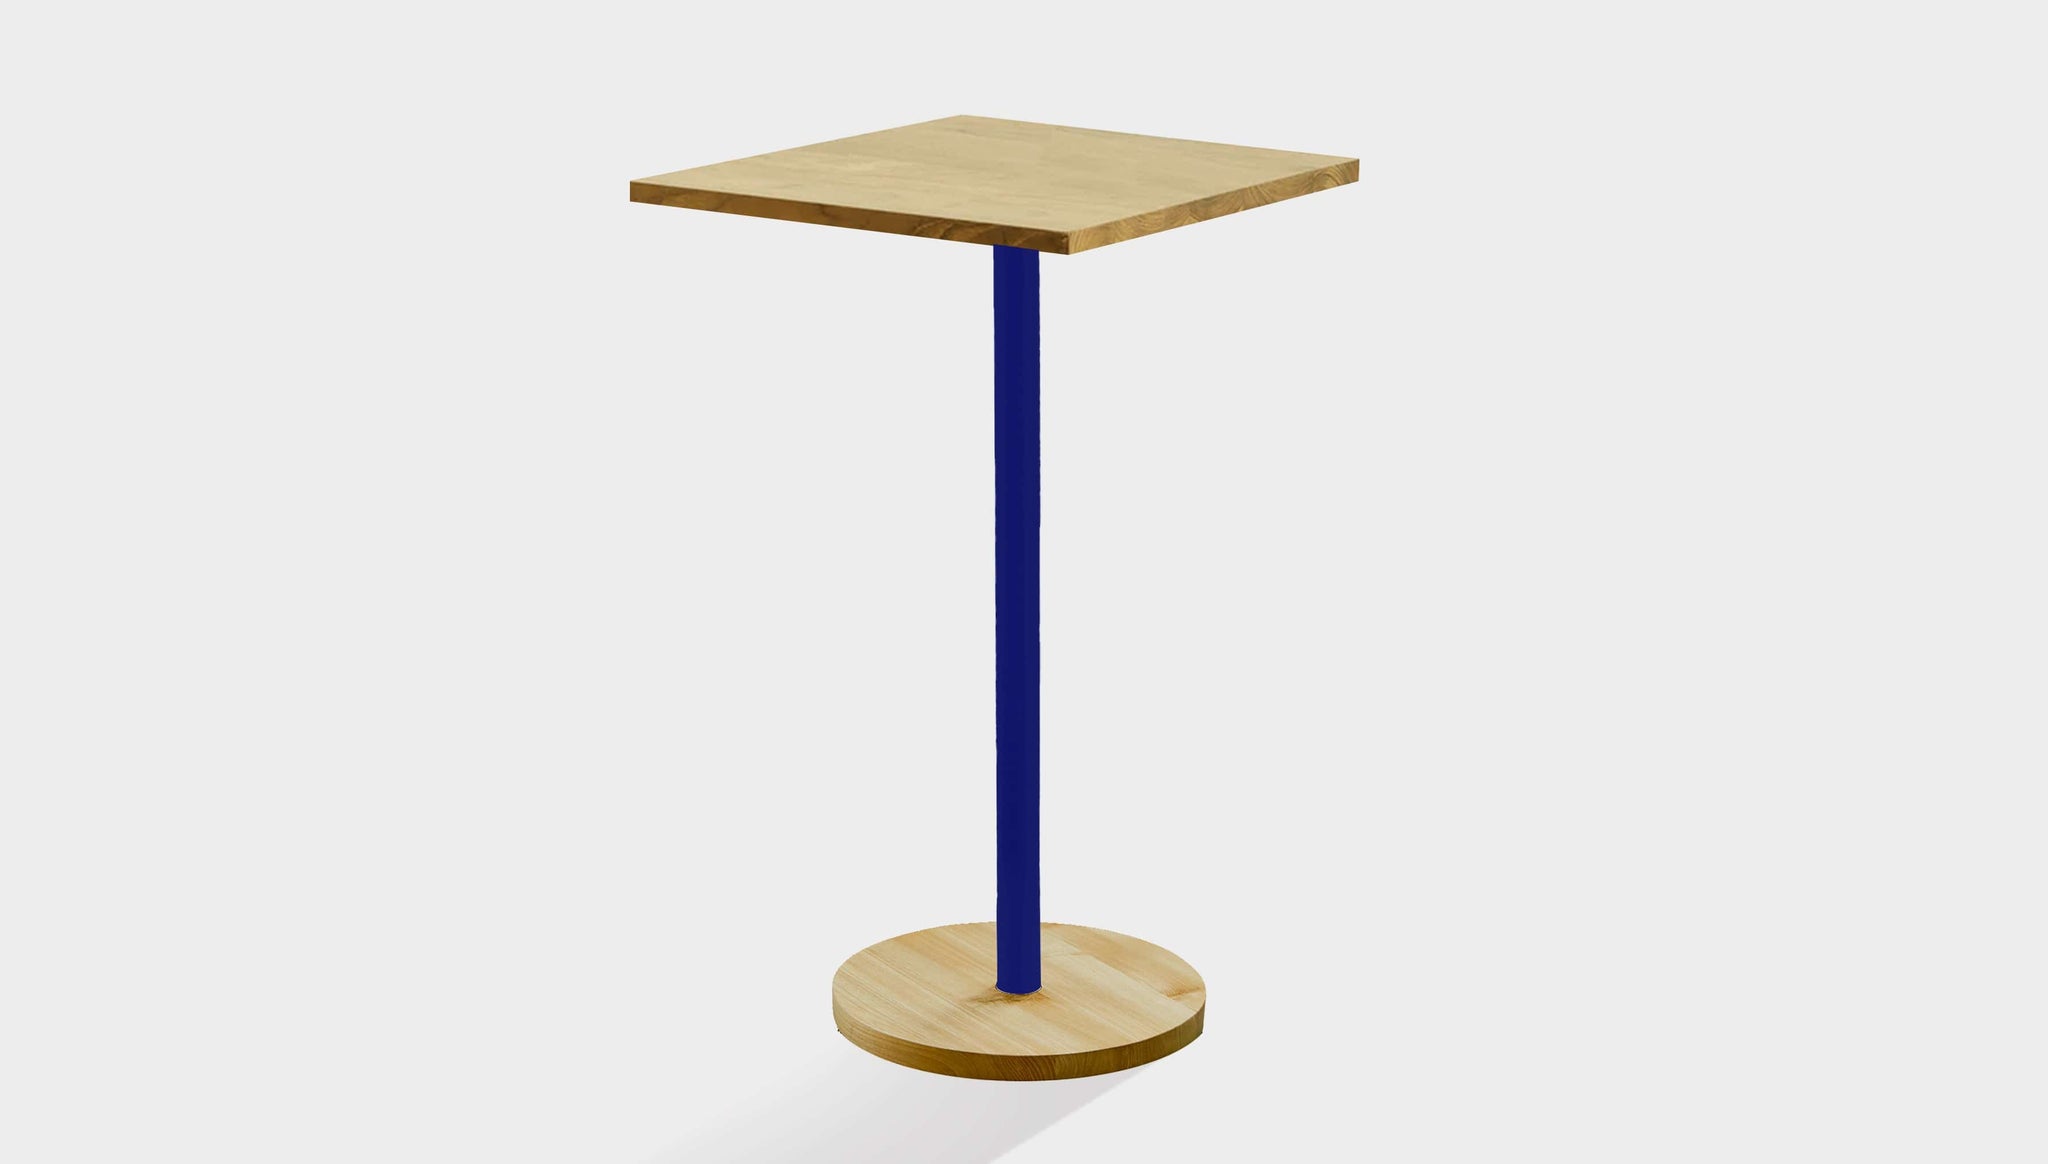 reddie-raw cafe & bar pedestal table 60dia x 100H *cm / Solid Reclaimed Wood Teak~Oak / Metal~Navy Bob Pedestal Square Cafe & Bar Table (2 heights)